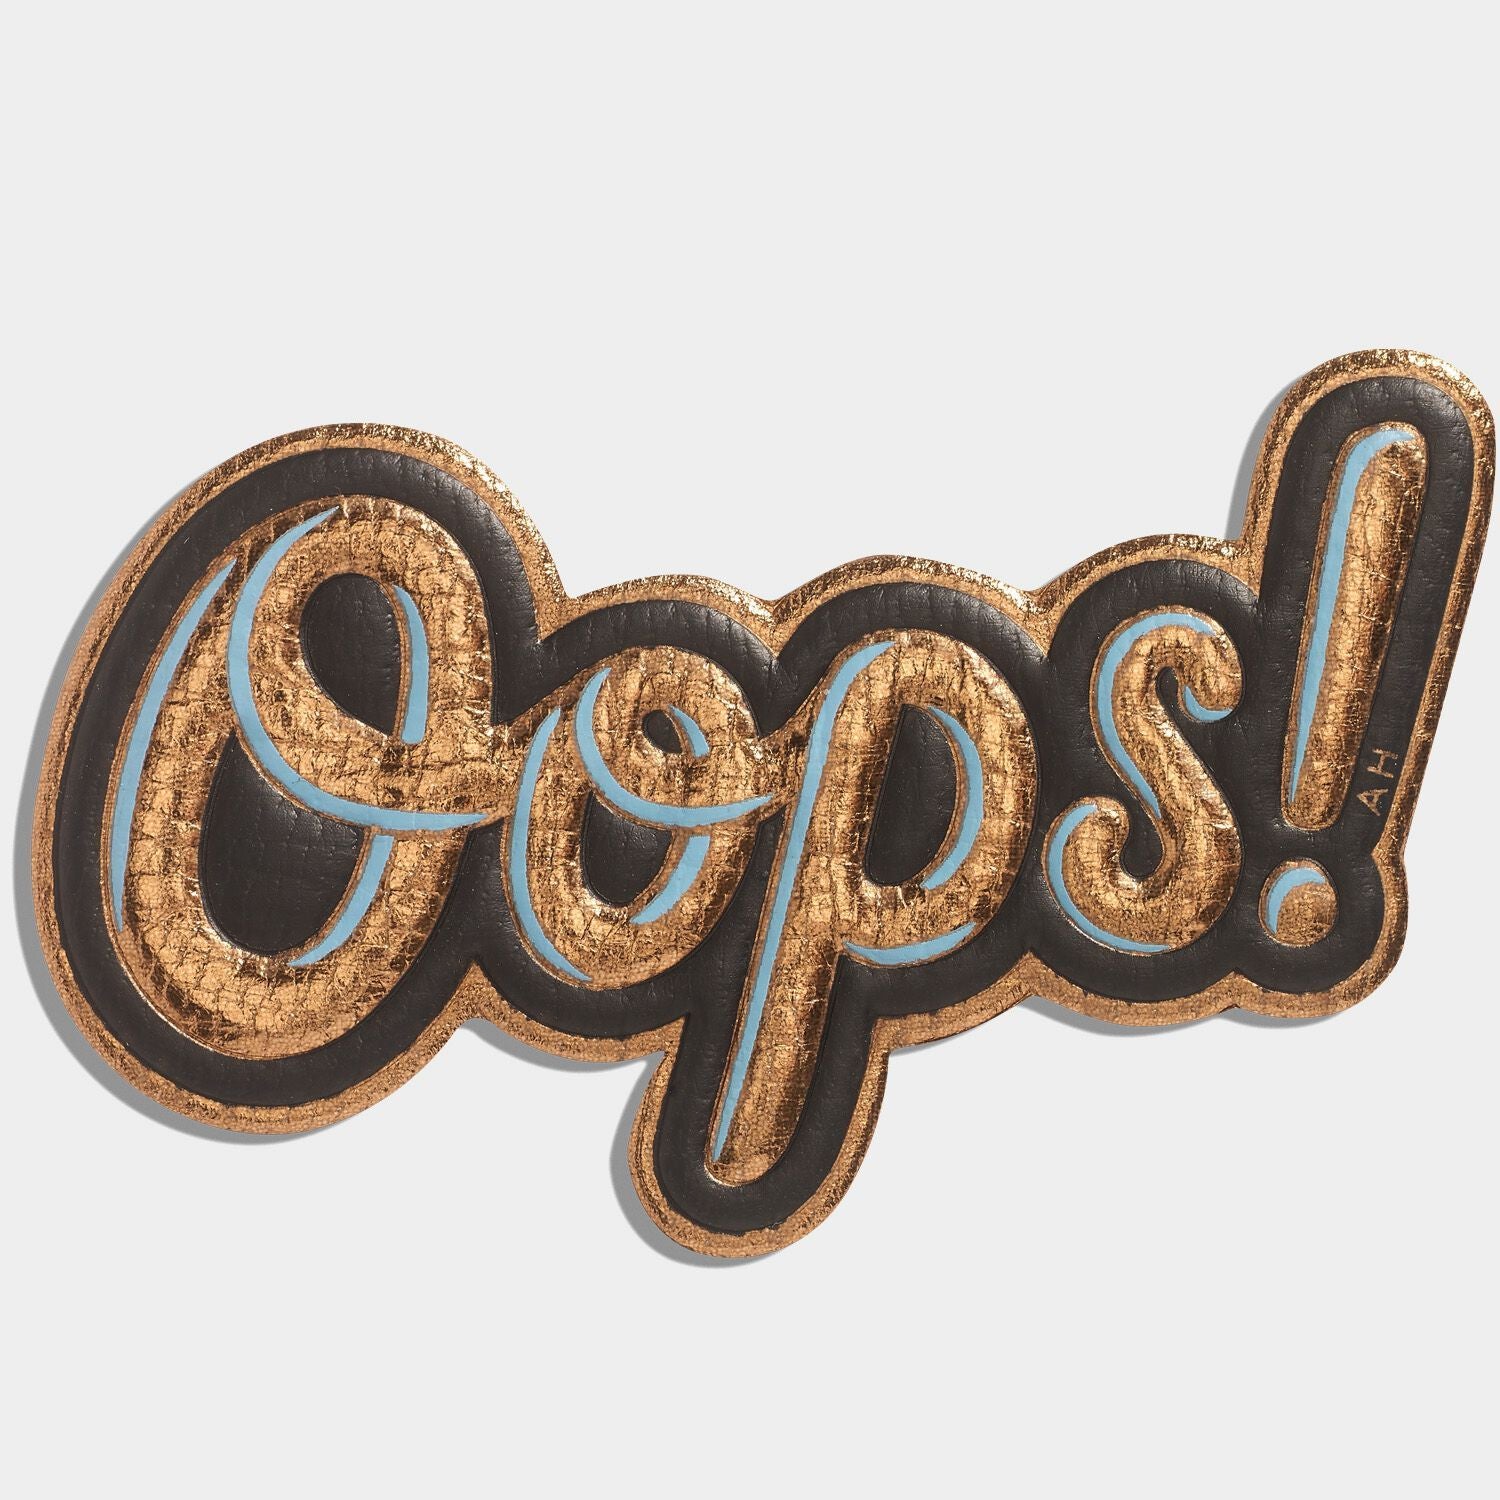 OOPS! Sticker -

                  
                    Metallic Capra in Chestnut -
                  

                  Anya Hindmarch US
